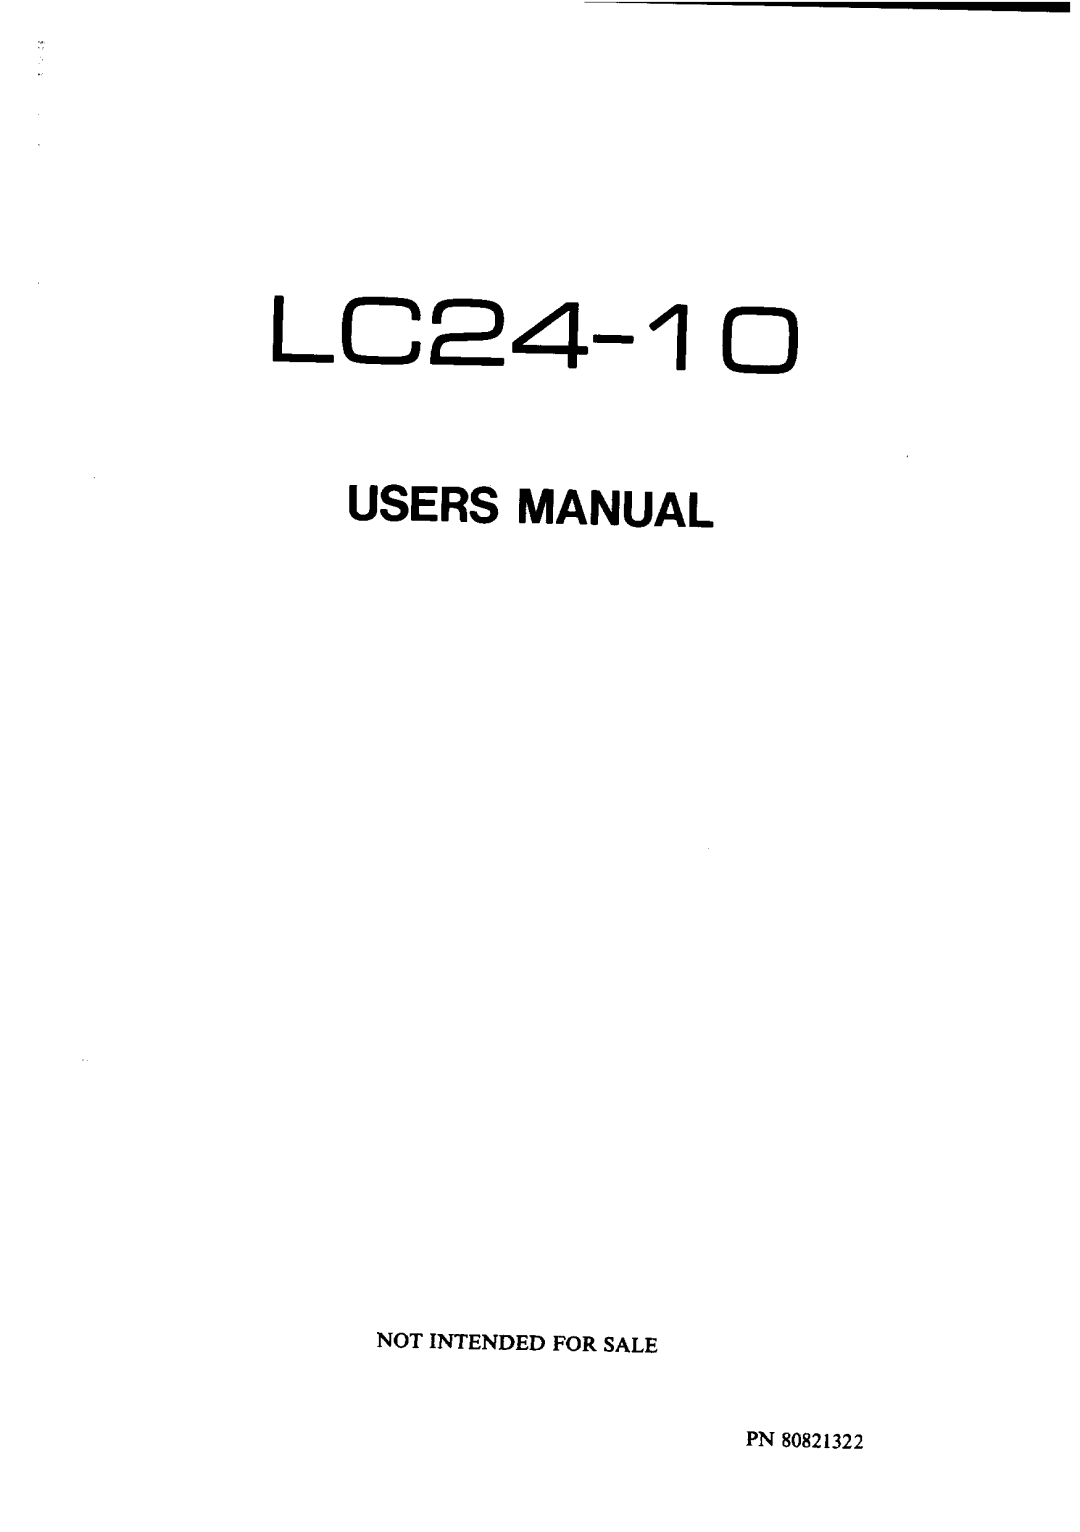 Star Micronics LC24-10 user manual 